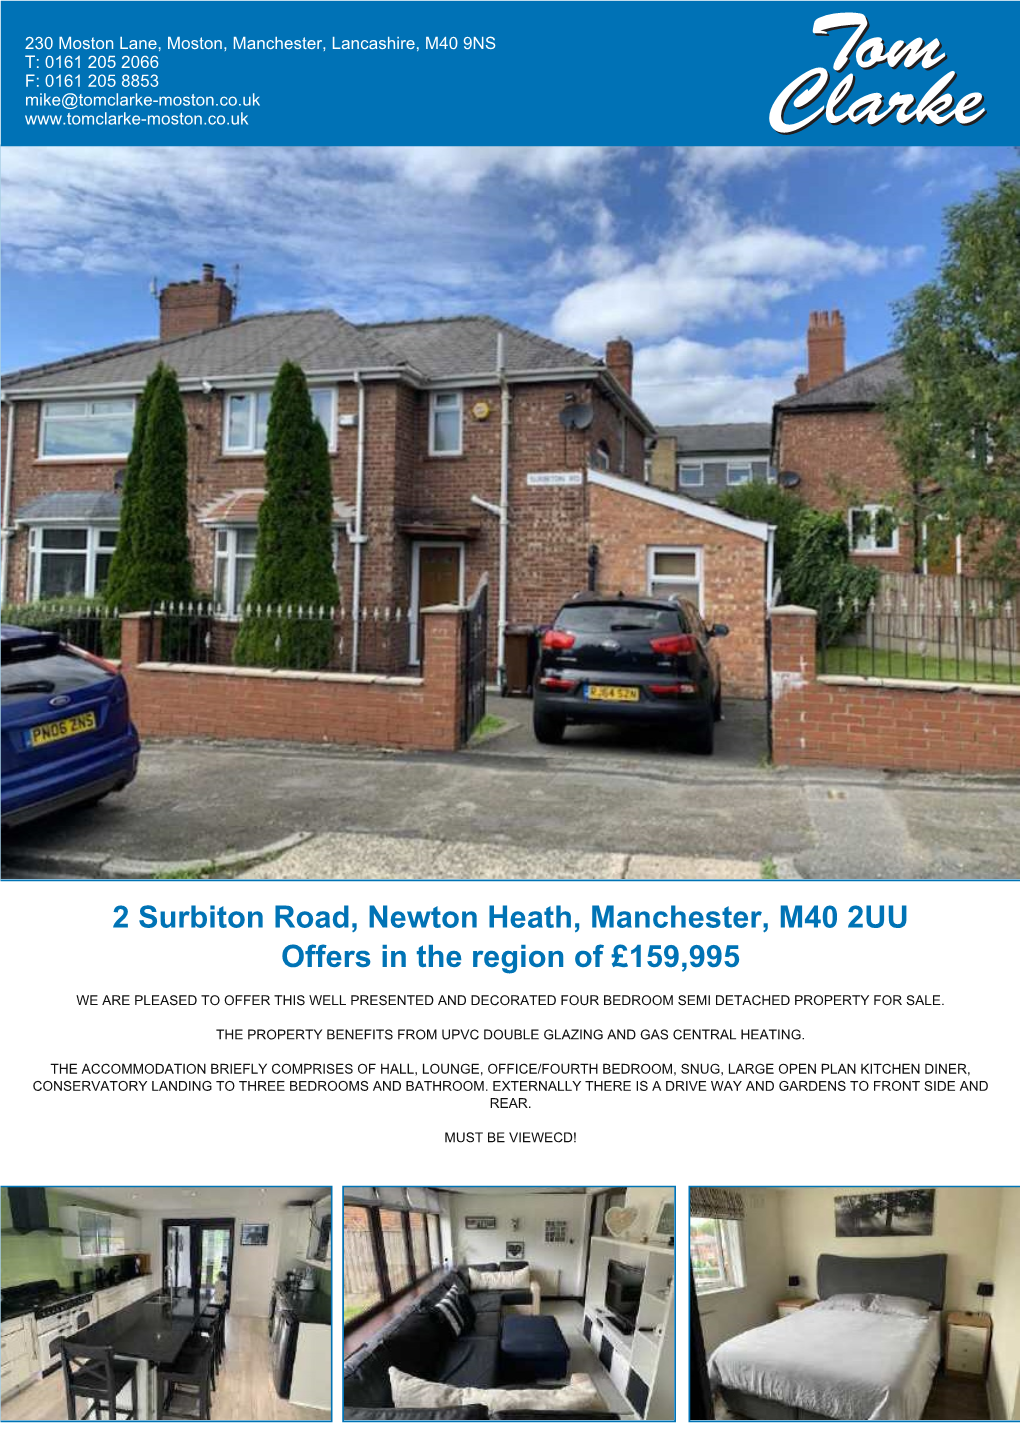 2 Surbiton Road, Newton Heath, Manchester, M40 2UU Offers in the Region of £159,995